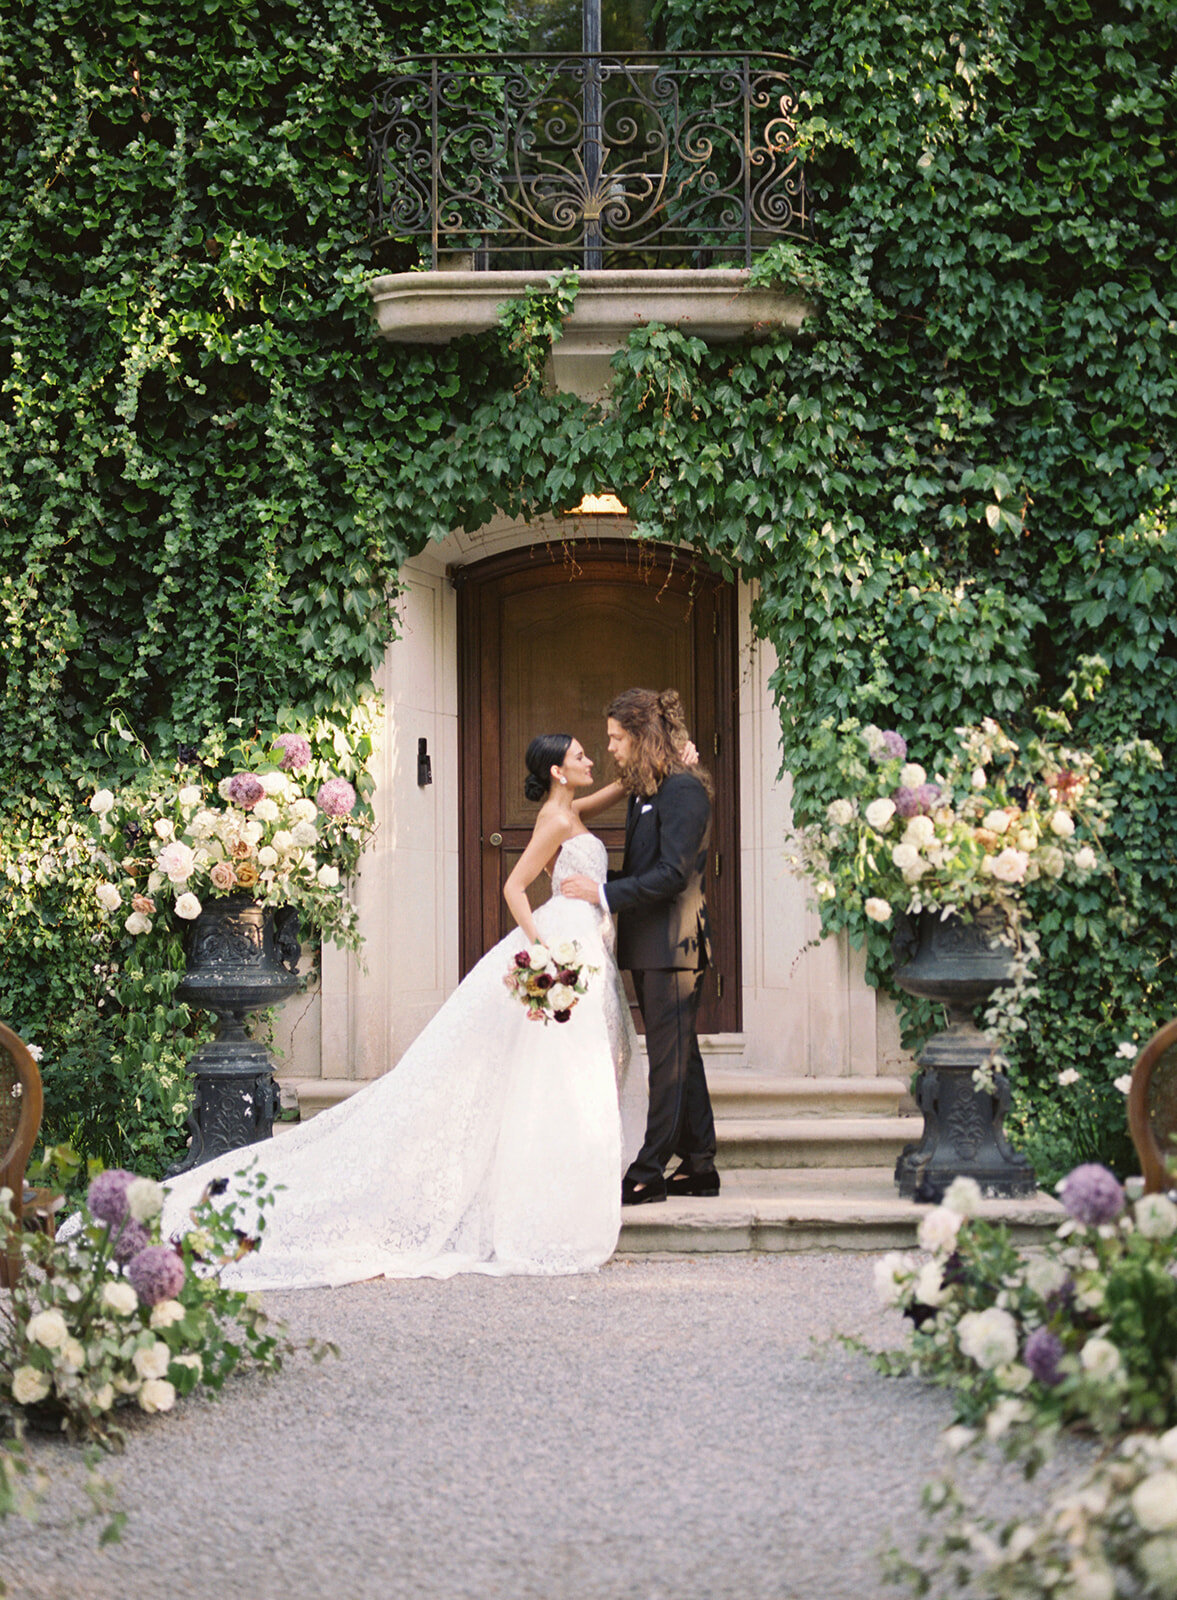 Greencrest Manor - Battle Creek Michigan Wedding Venues - Stephanie Michelle Photography - _stephaniemichellephotog2-R1-E010